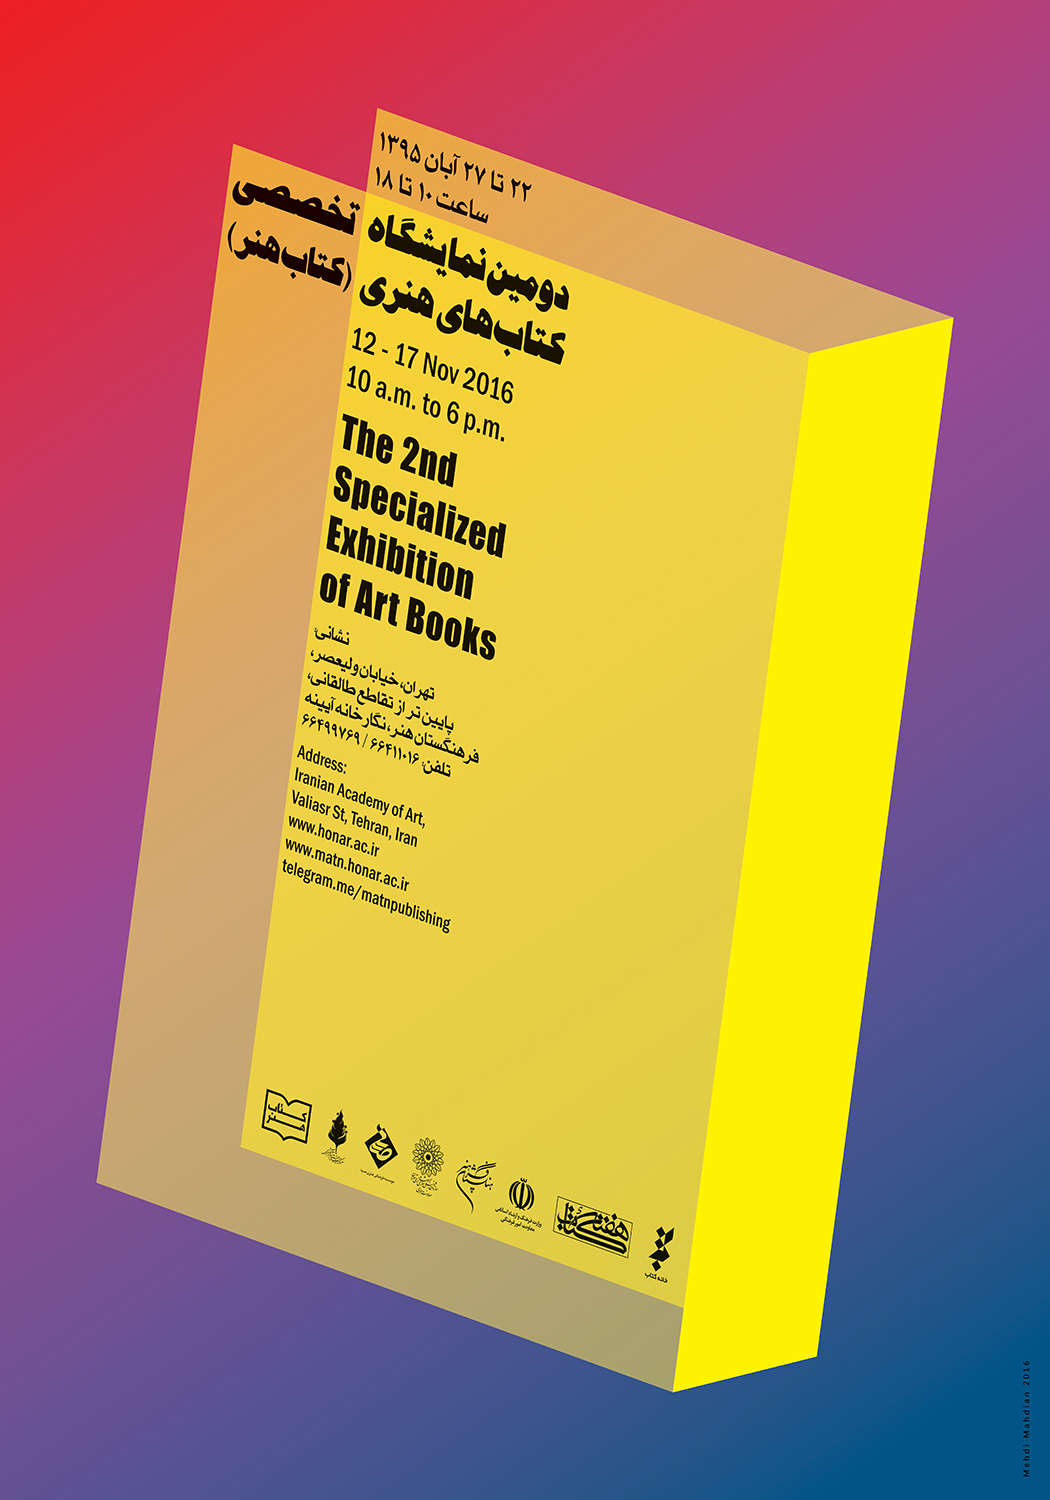 Mehdi-Mahdian-2nd-Exhibition-of-Art-Books-2016